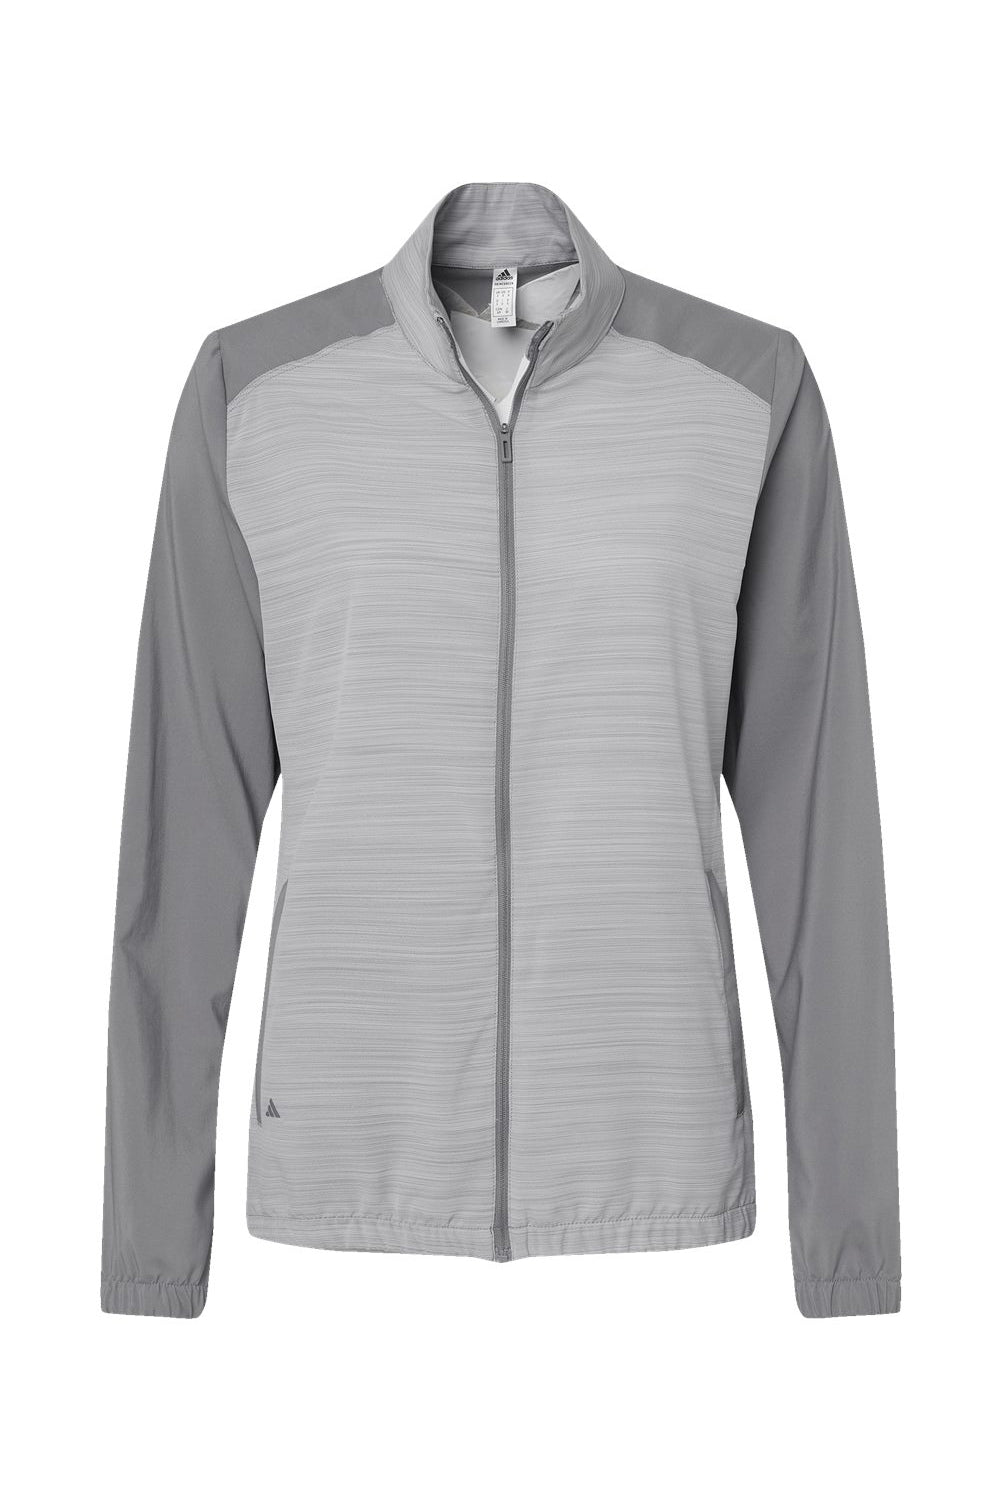 Adidas A547 Womens Heather Block Full Zip Windshirt Grey/Heather Grey Flat Front